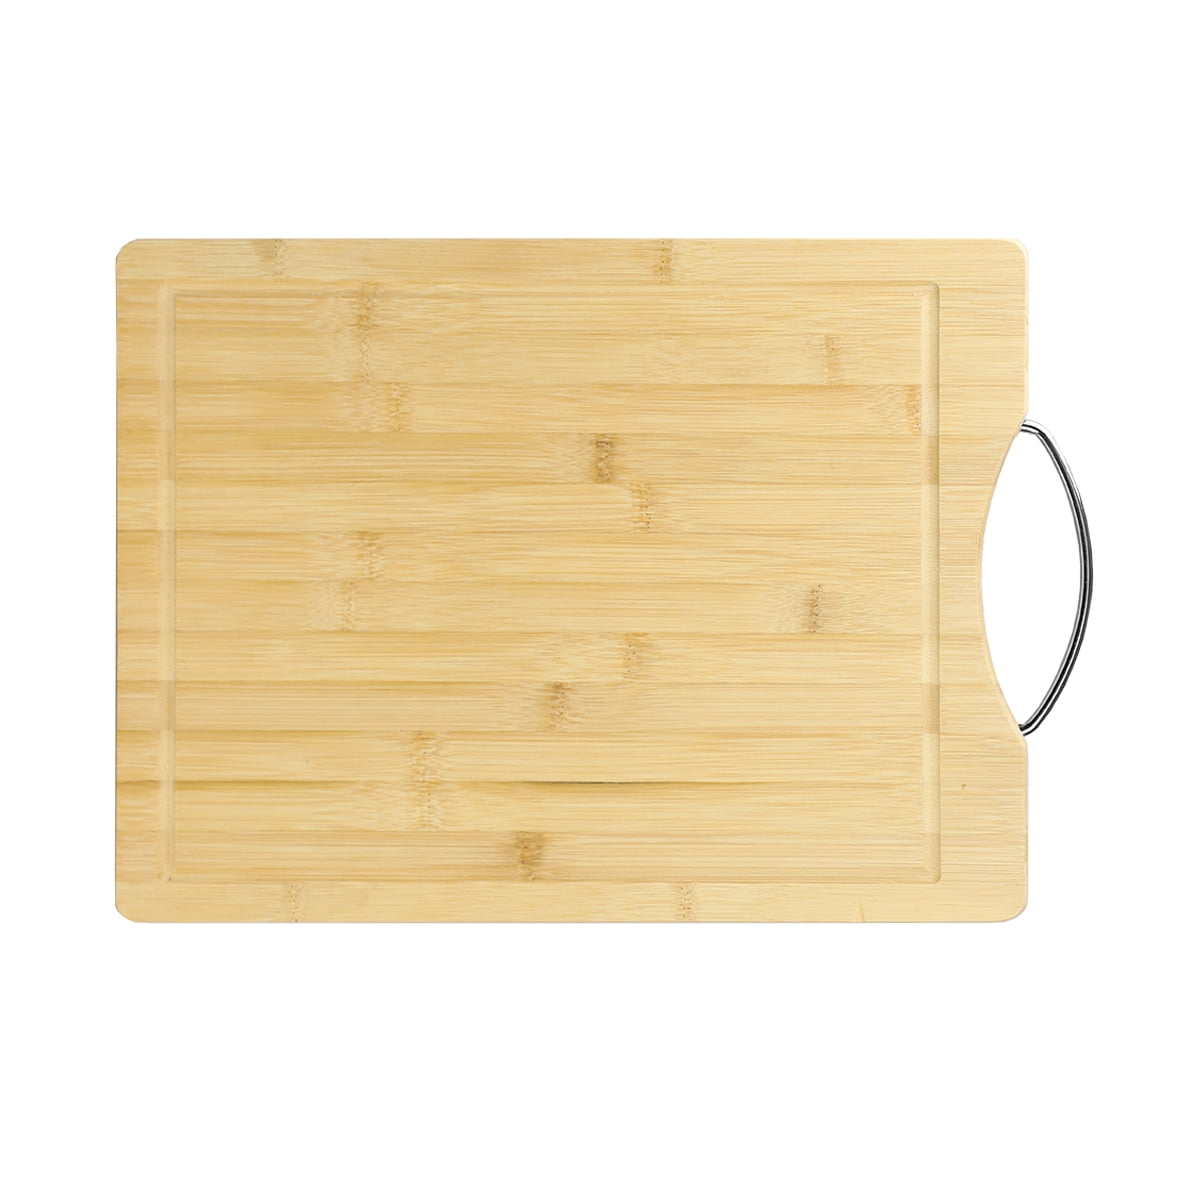 HÖGSMA Cutting board, bamboo, 16 ½x12 - IKEA